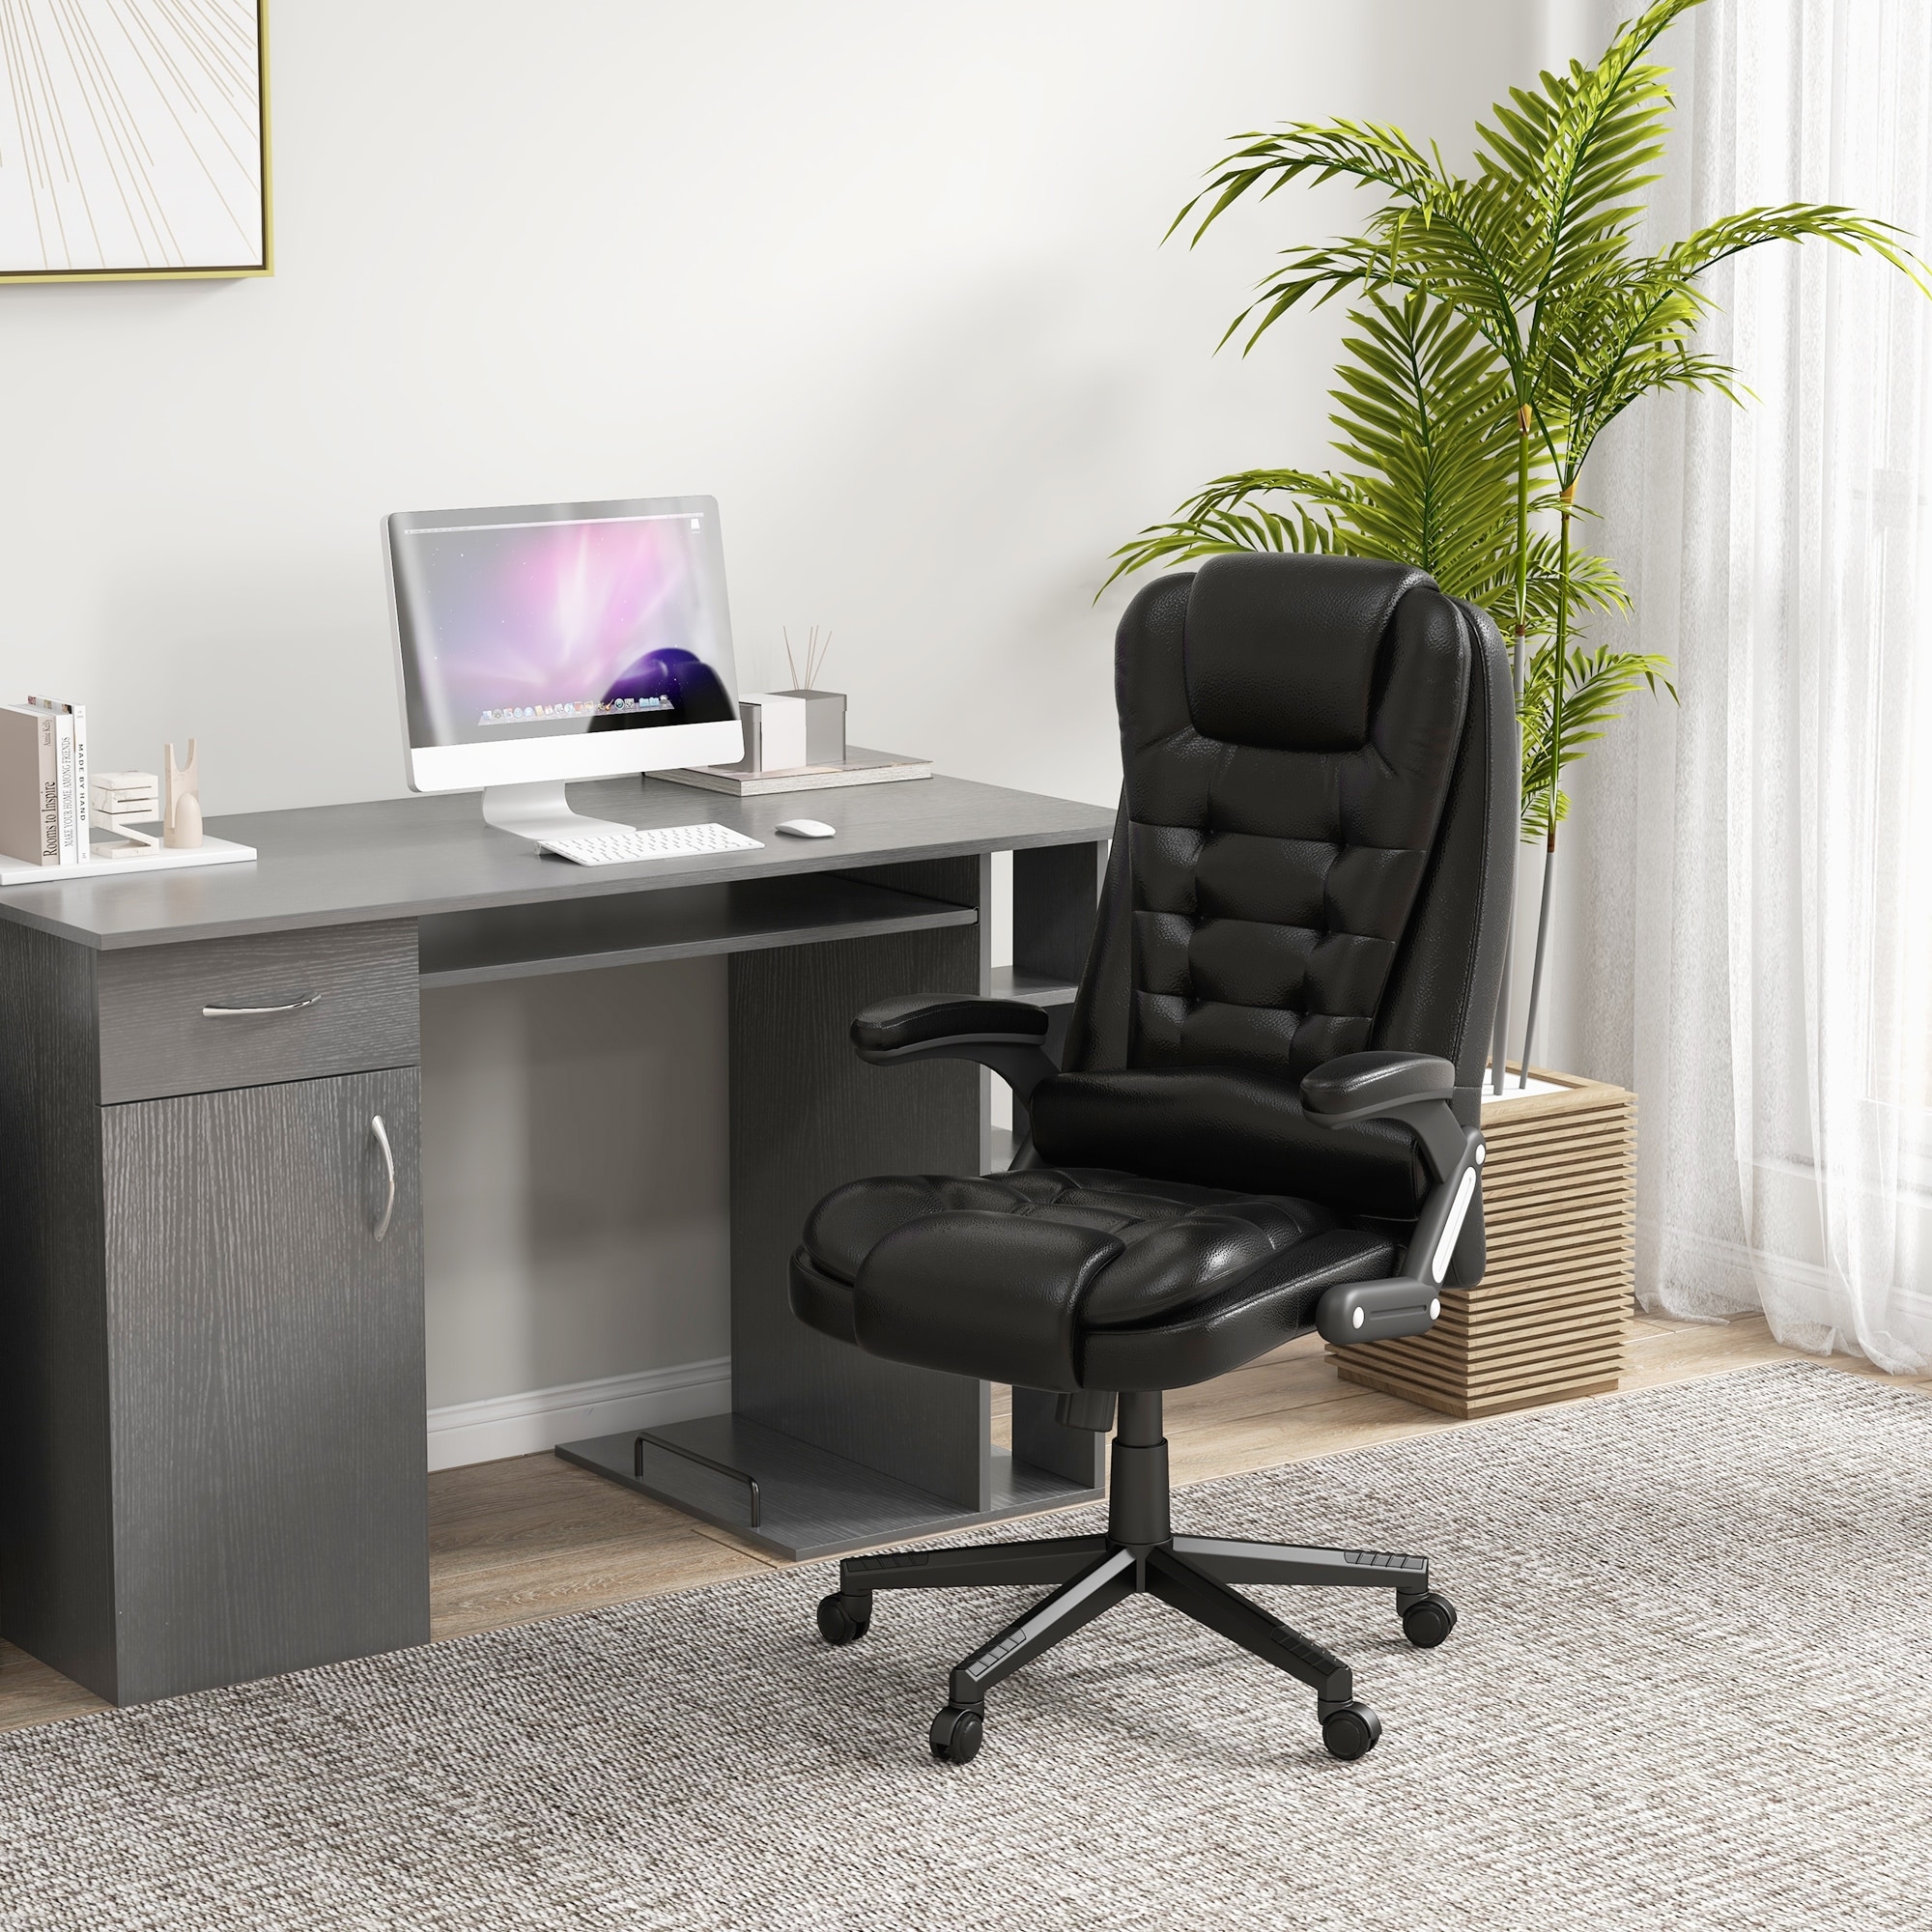 4-Point Massage Ergonomic Office Chair w/ Heating, Footrest & Reclining Backrest Black